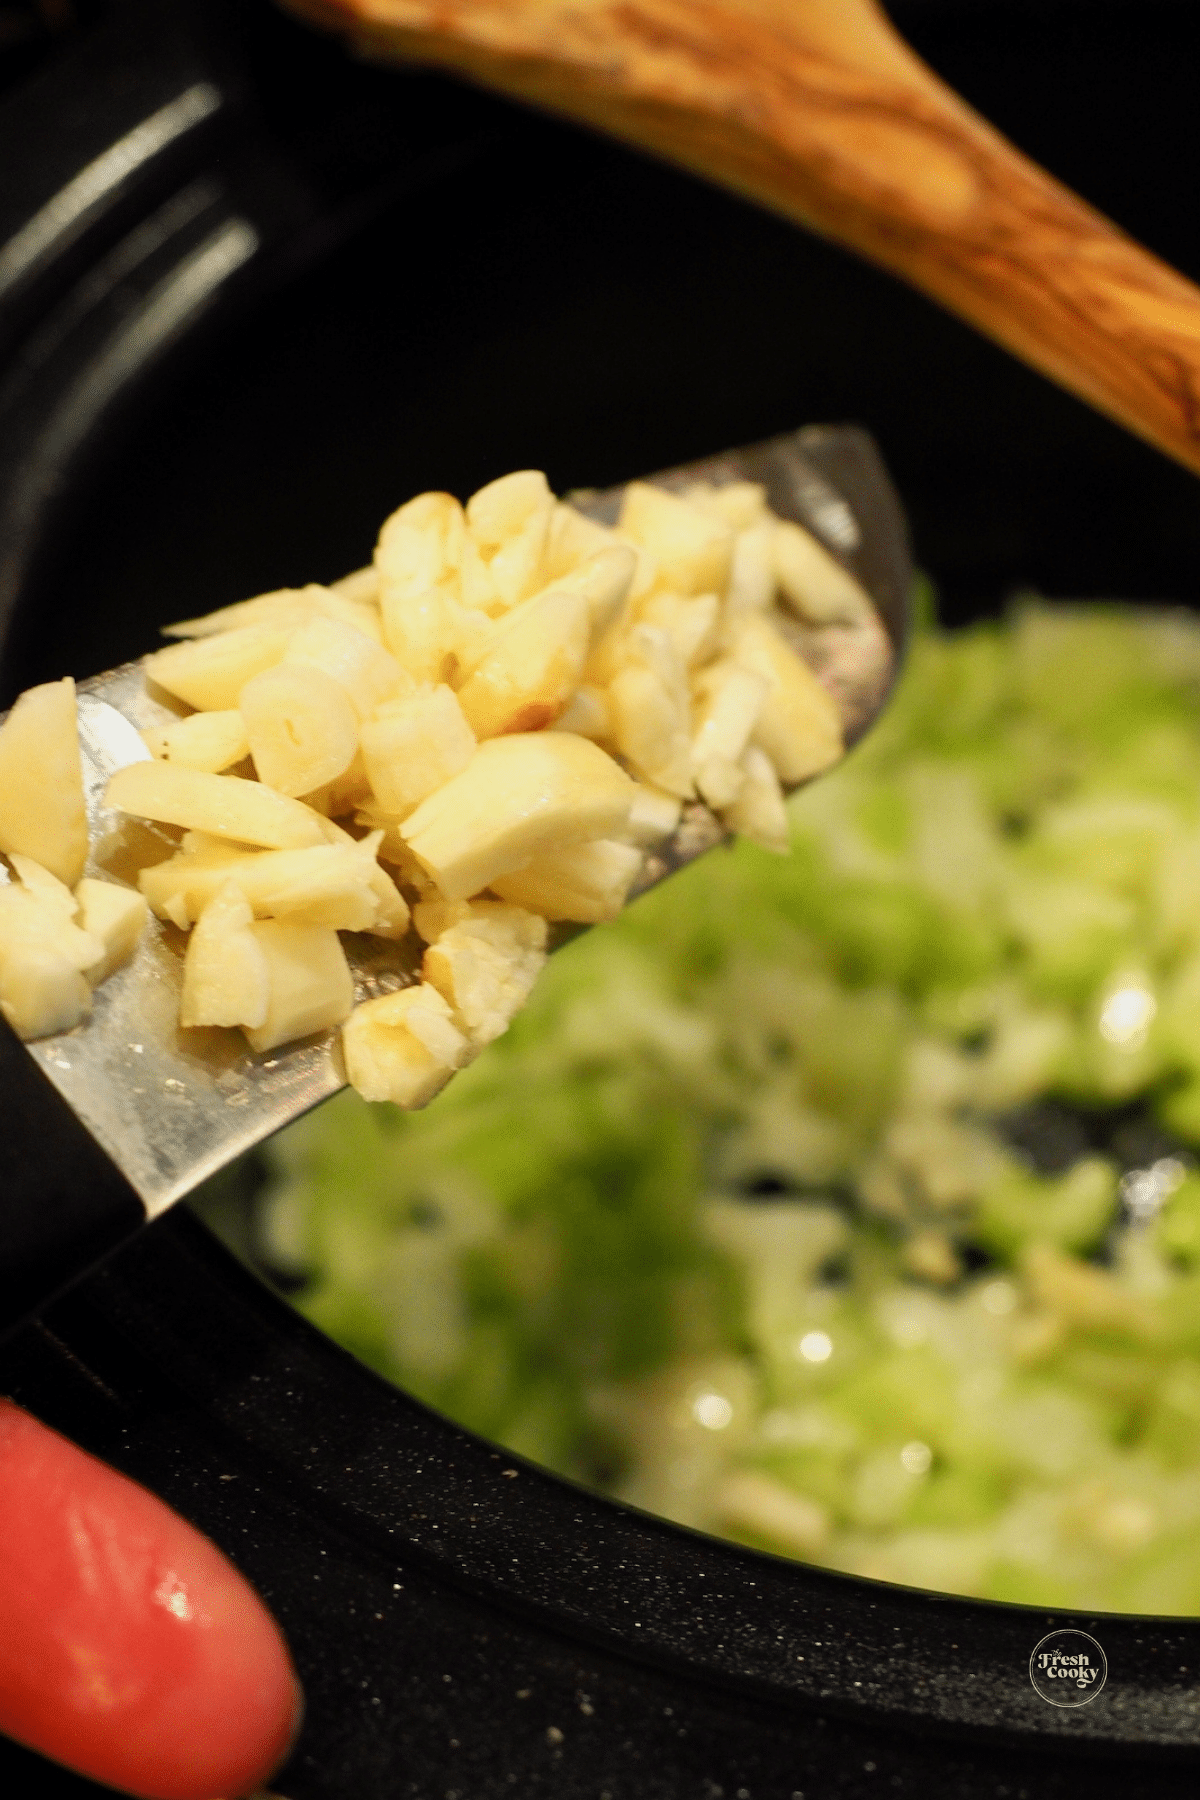 Add garlic and saute until fragrant. 